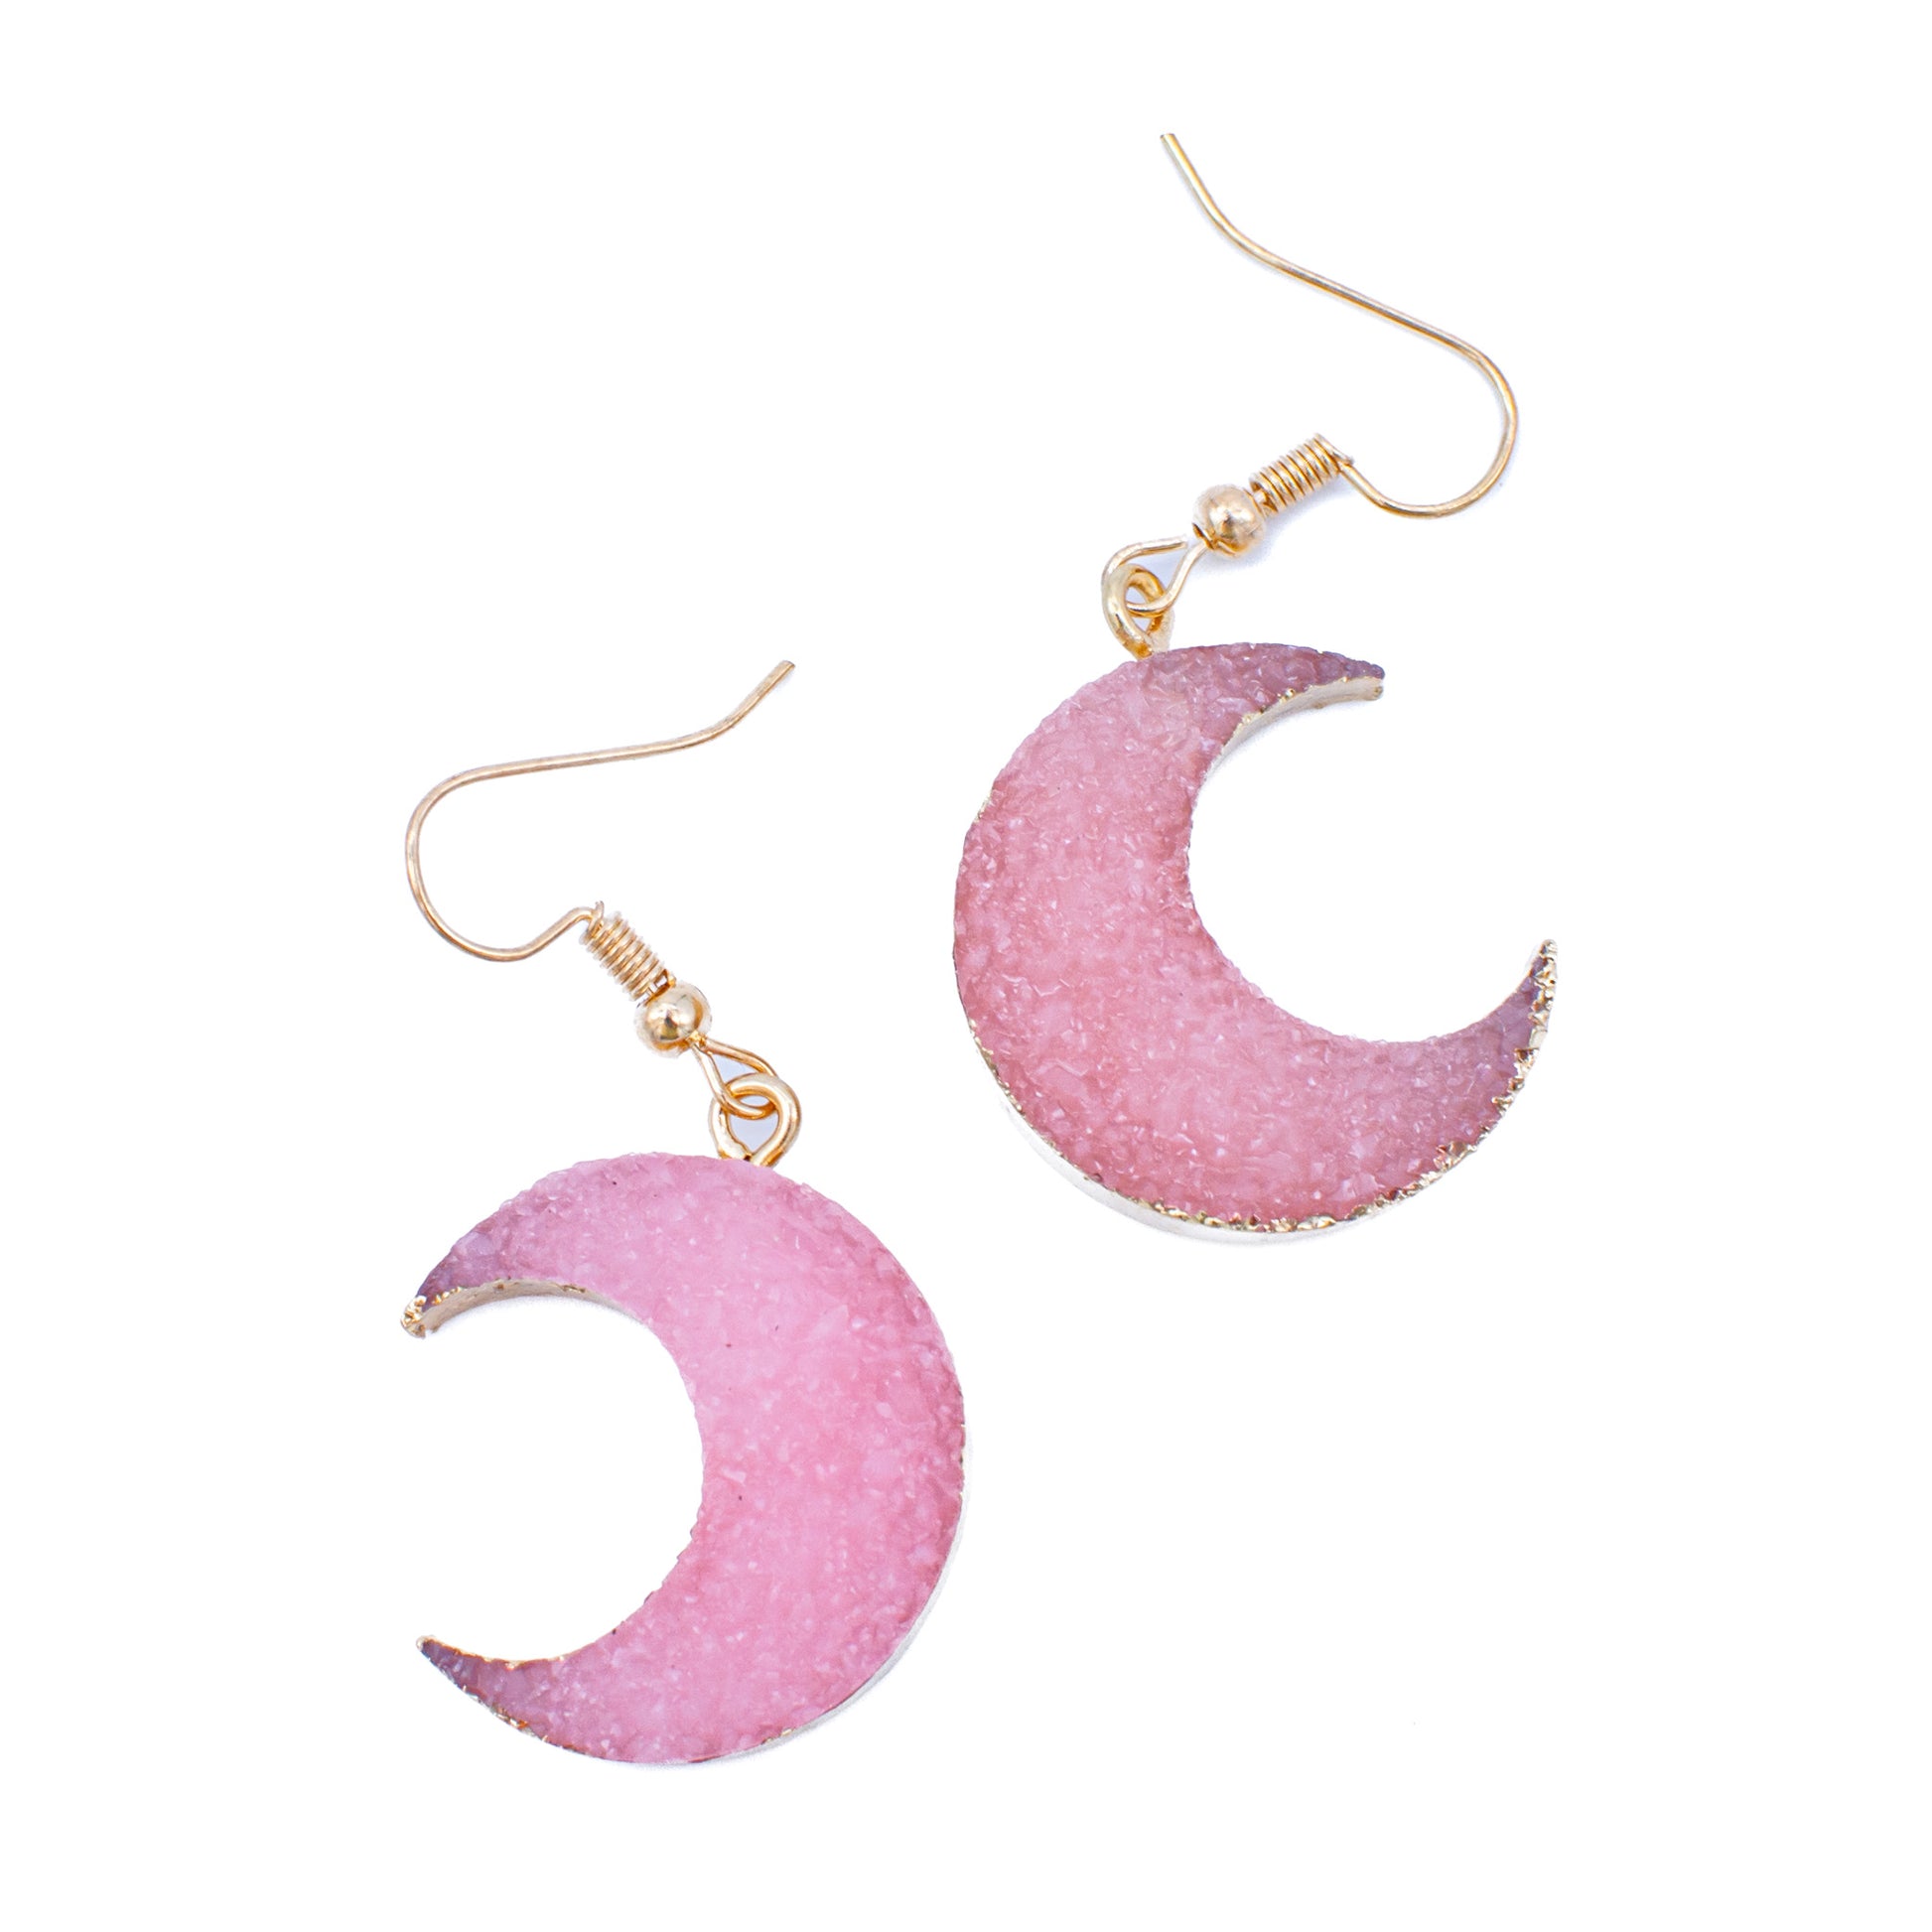 Rose Quartz Moon Earrings | The Good Witch of Salem